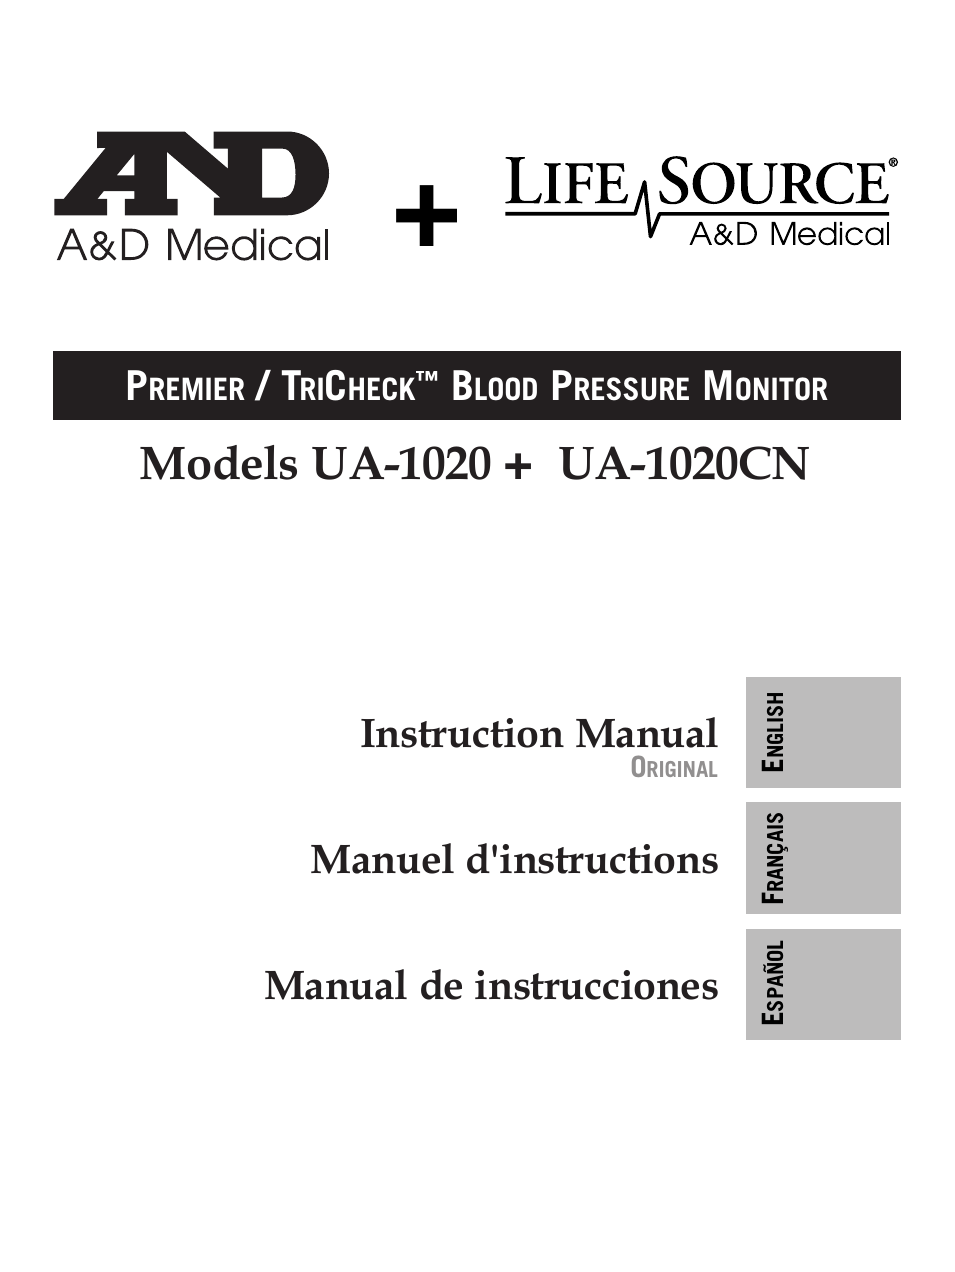 Premier/TriCheck Blood Pressure MOnitor UA-1020 (Page 1)